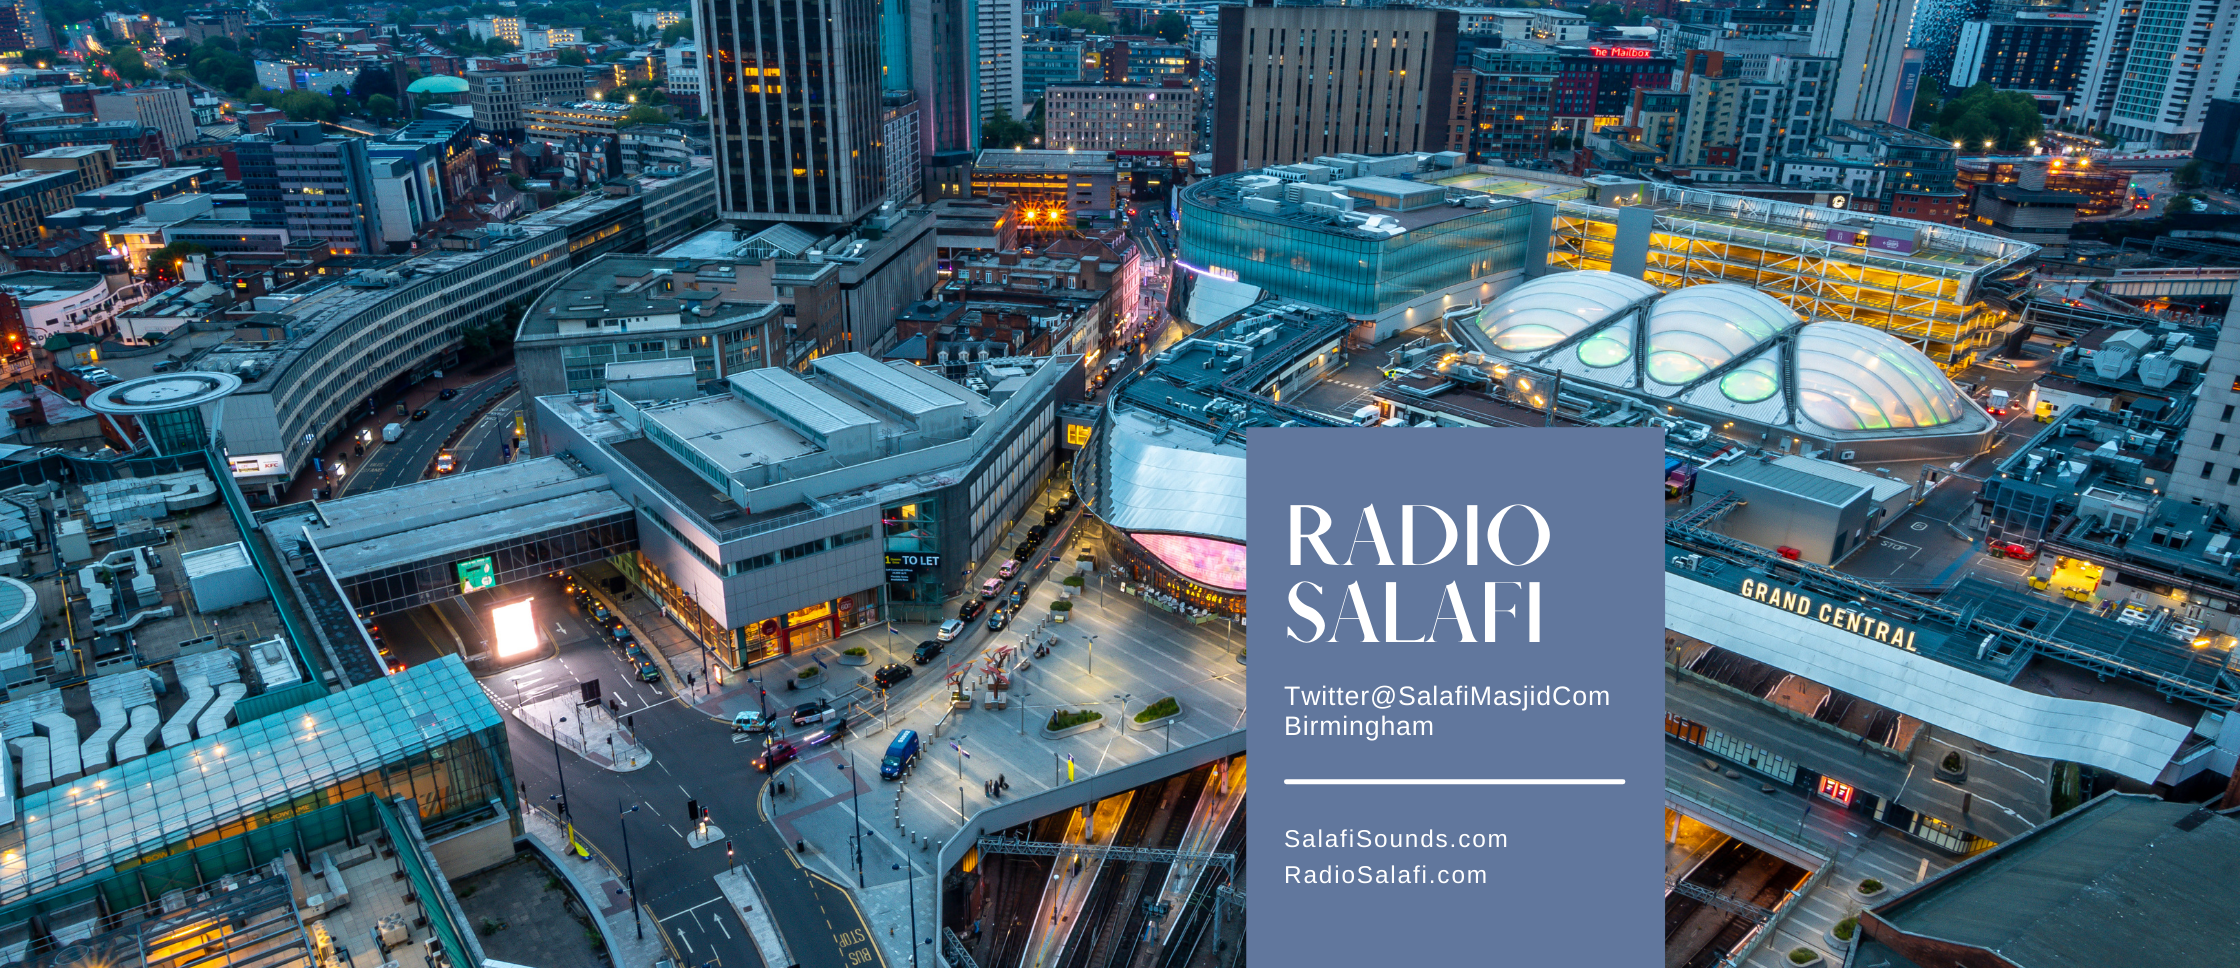 Salafi Radio